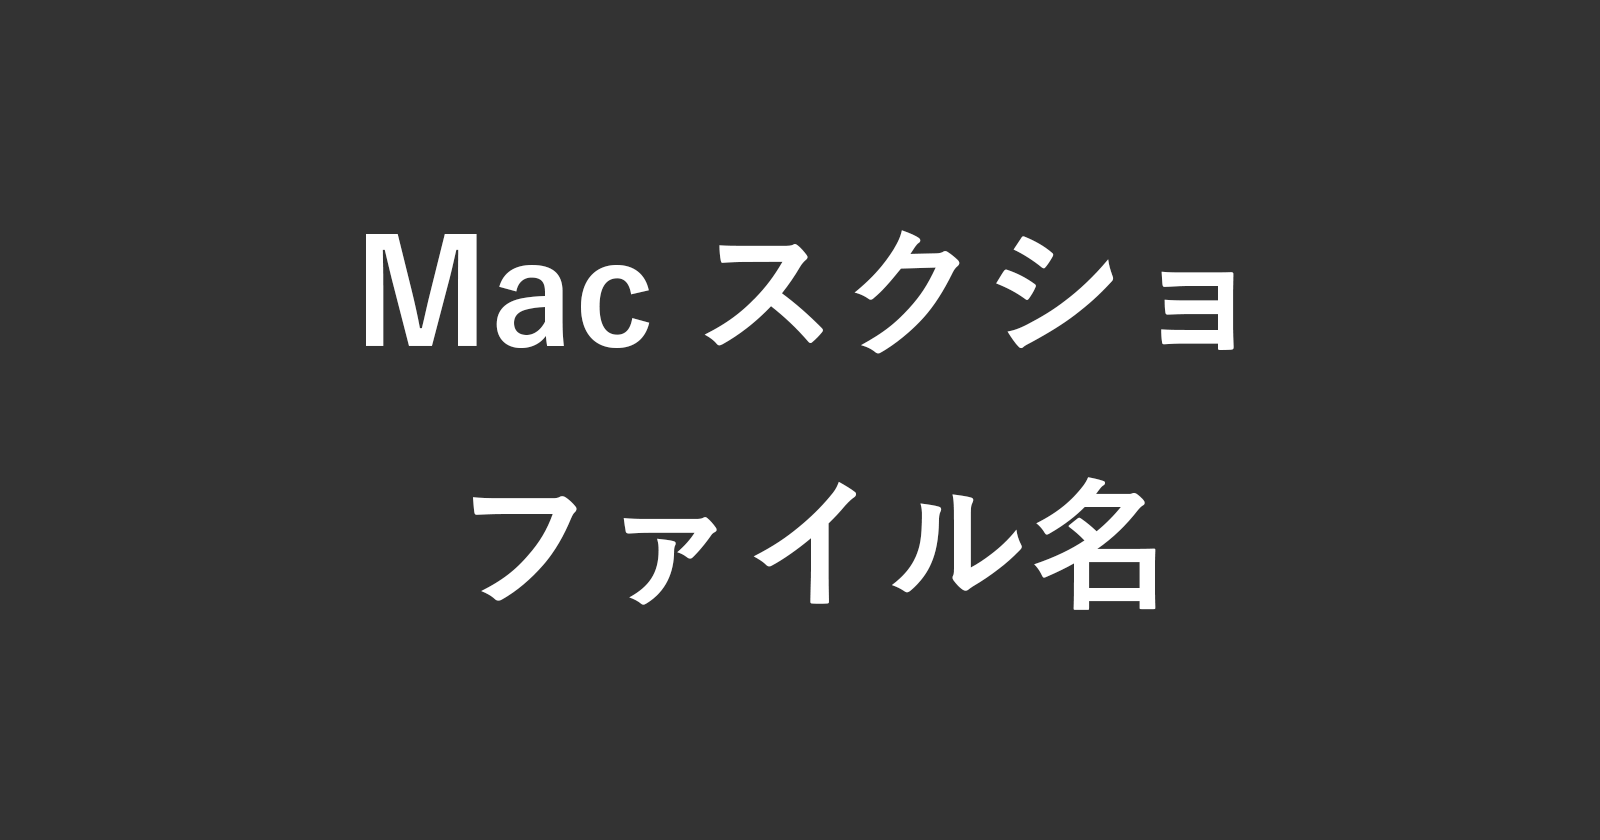 mac screenshot file name